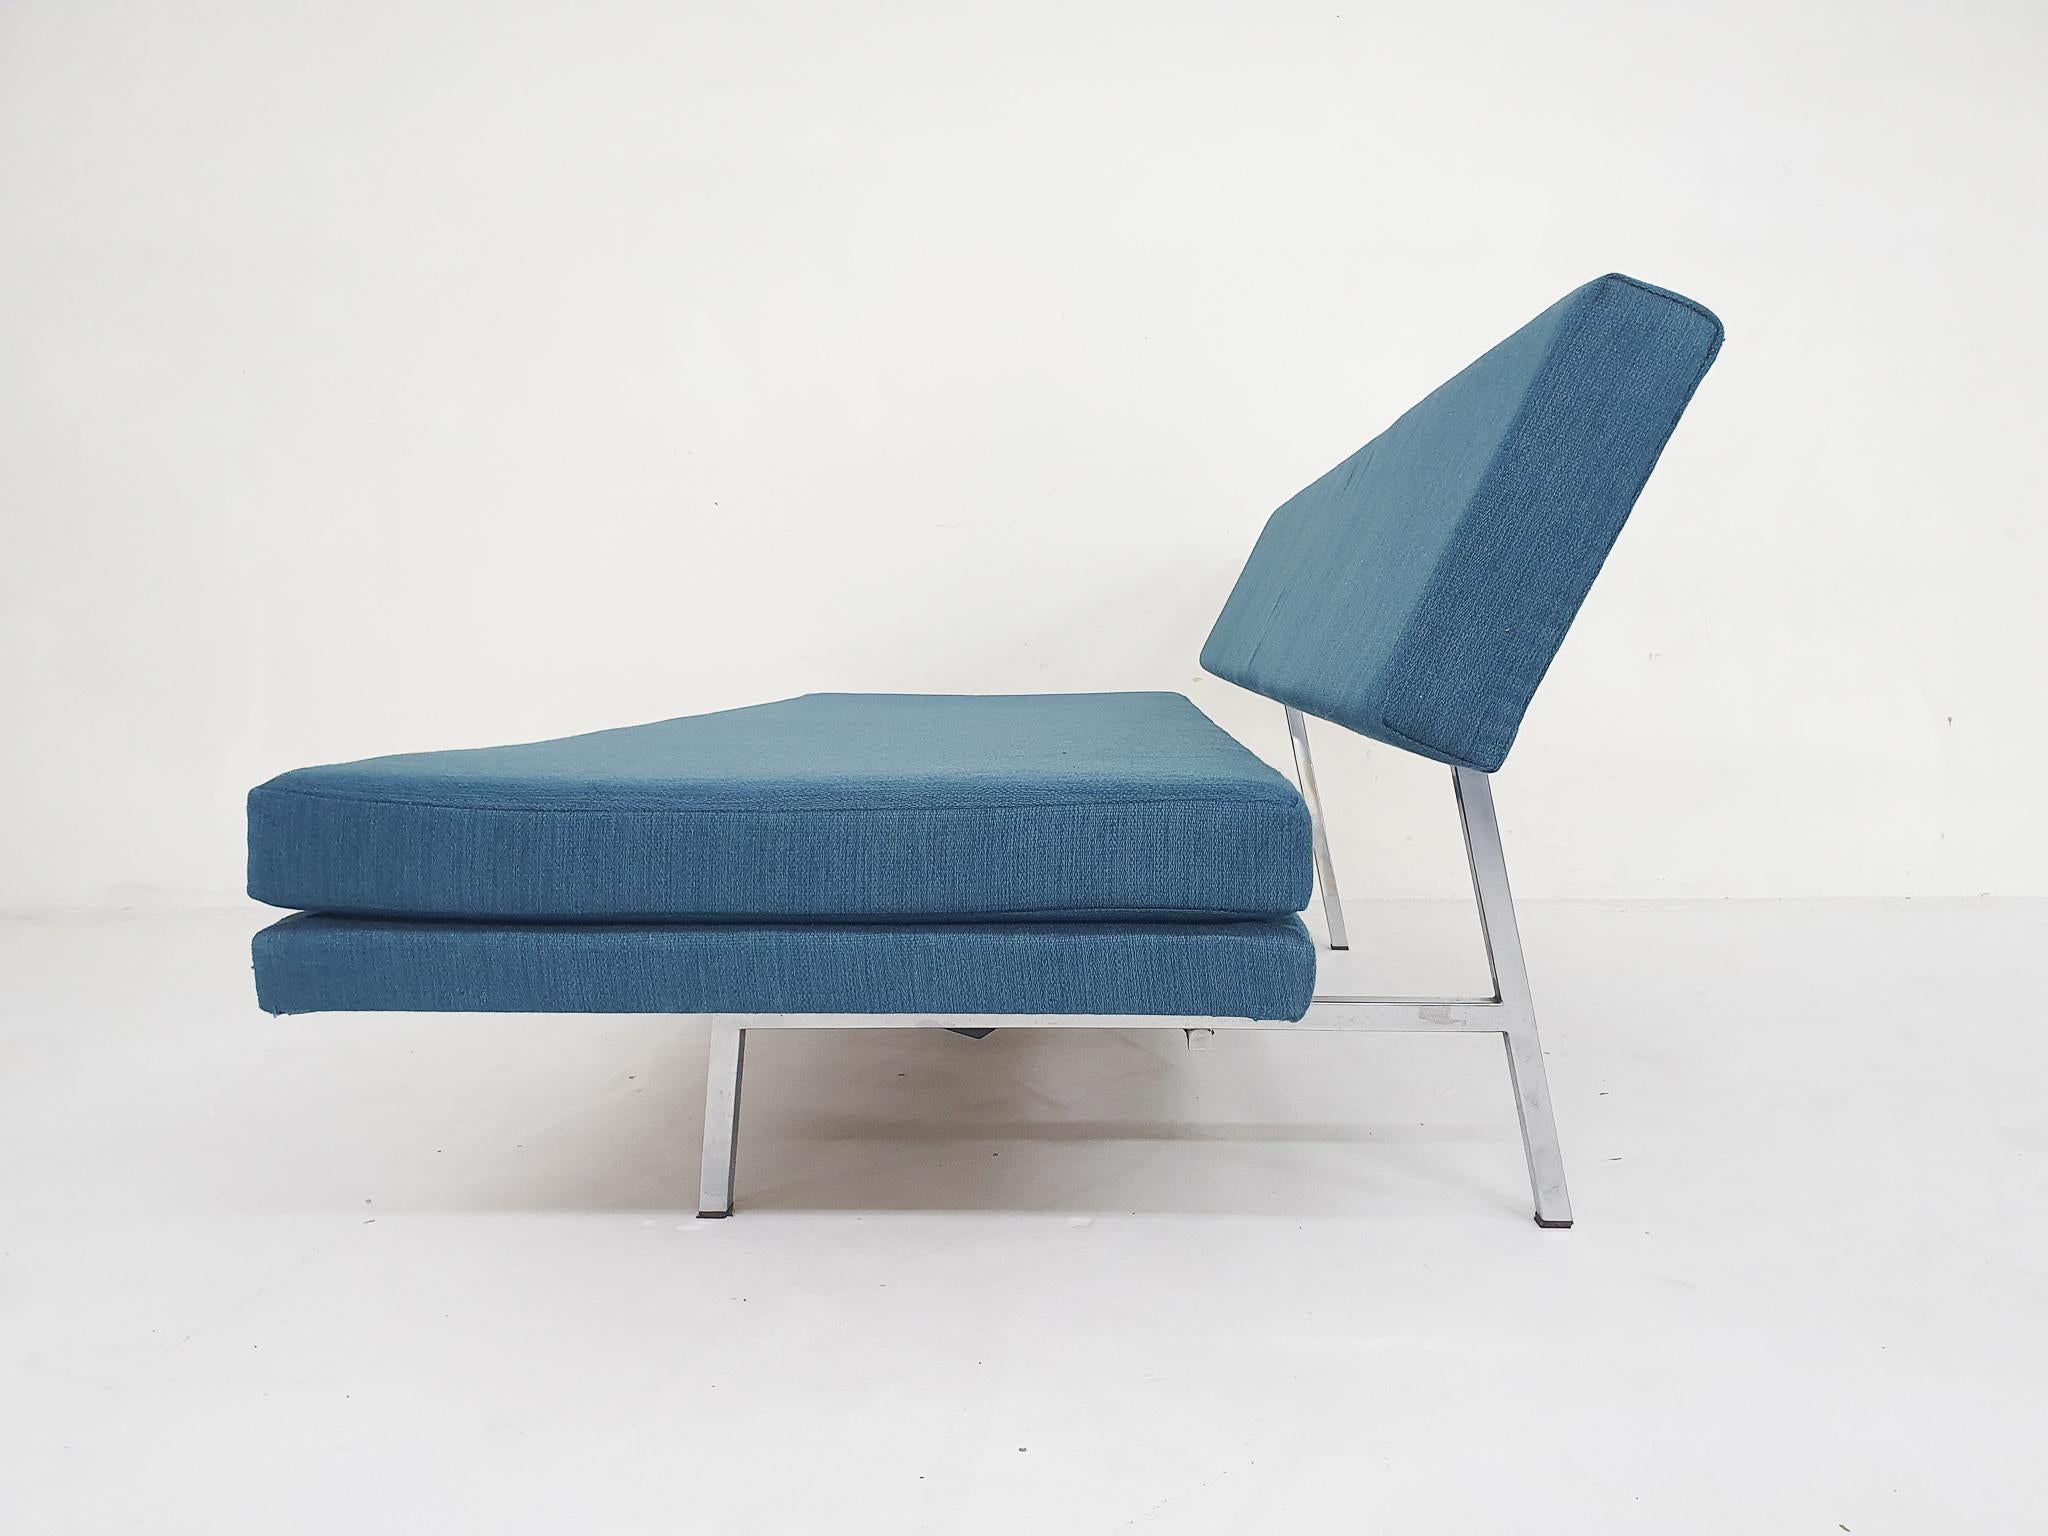 20th Century BR 02 sleeper sofa by Martin Visser for ’t Spectrum, The Netherlands, 1958